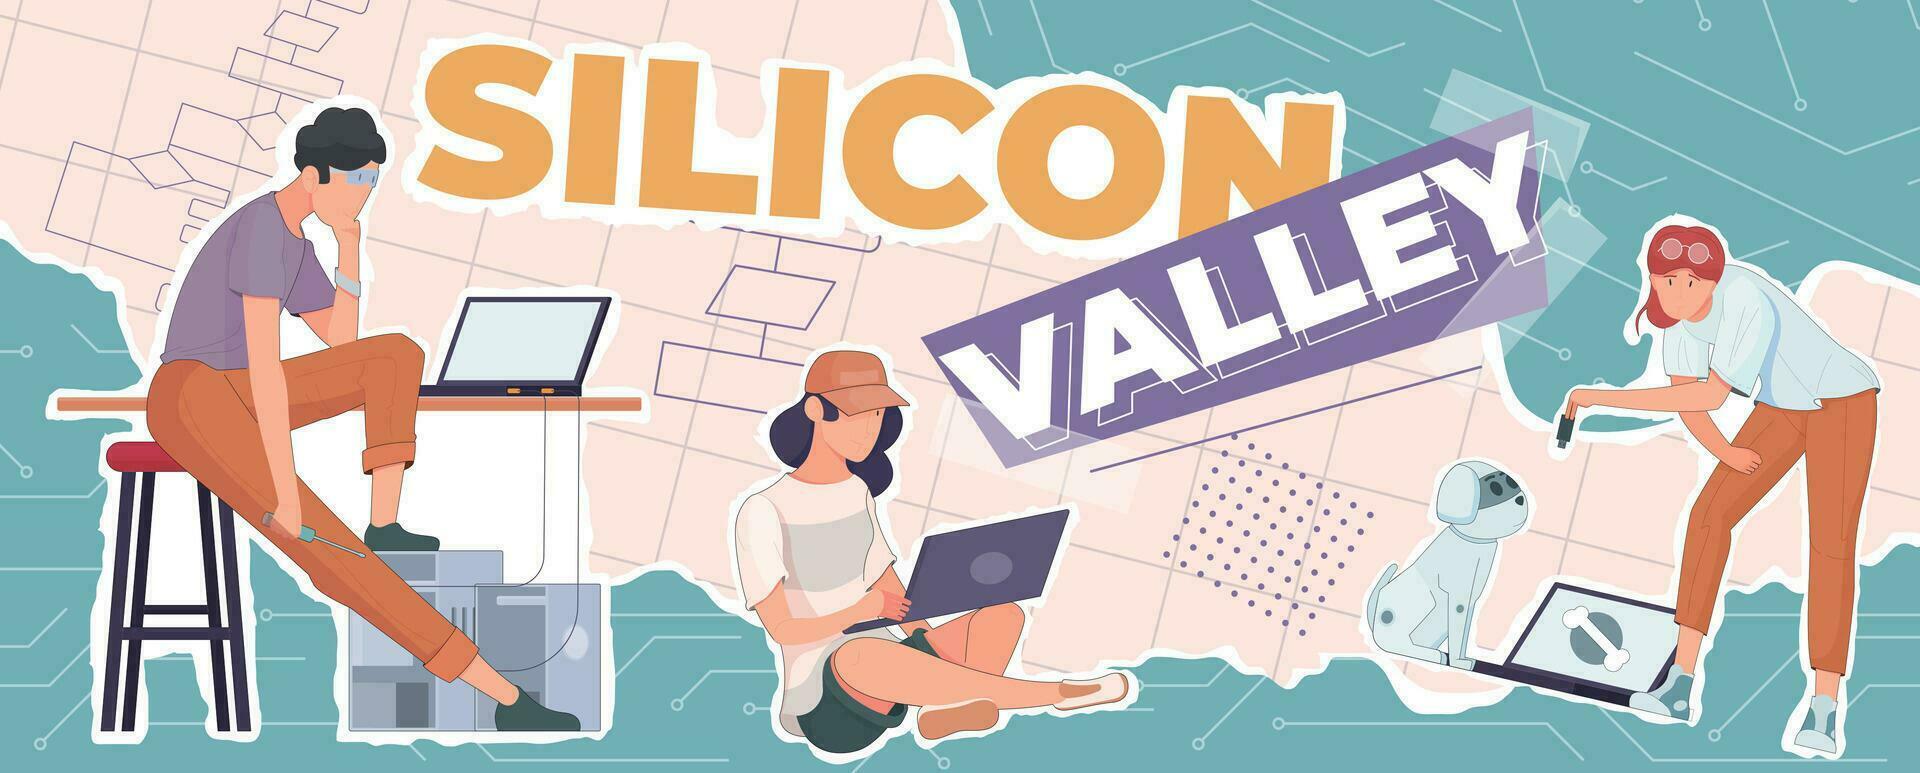 Silicon Valley Collage Composition vector